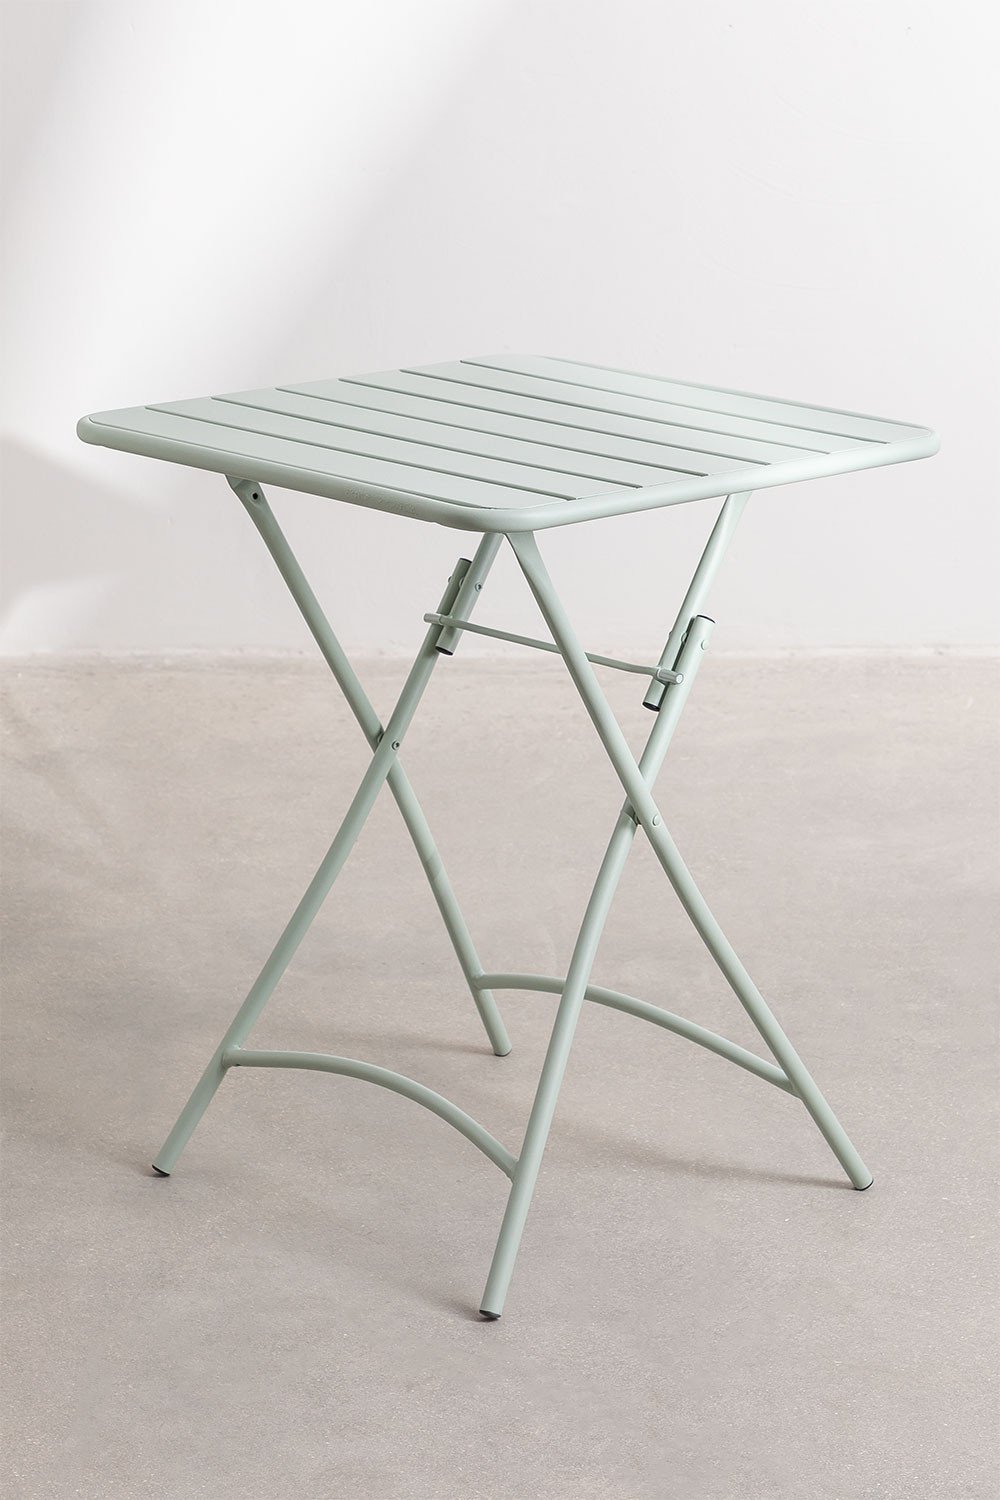 Table pliante en acier (60x60 cm) Janti, image de la galerie 1